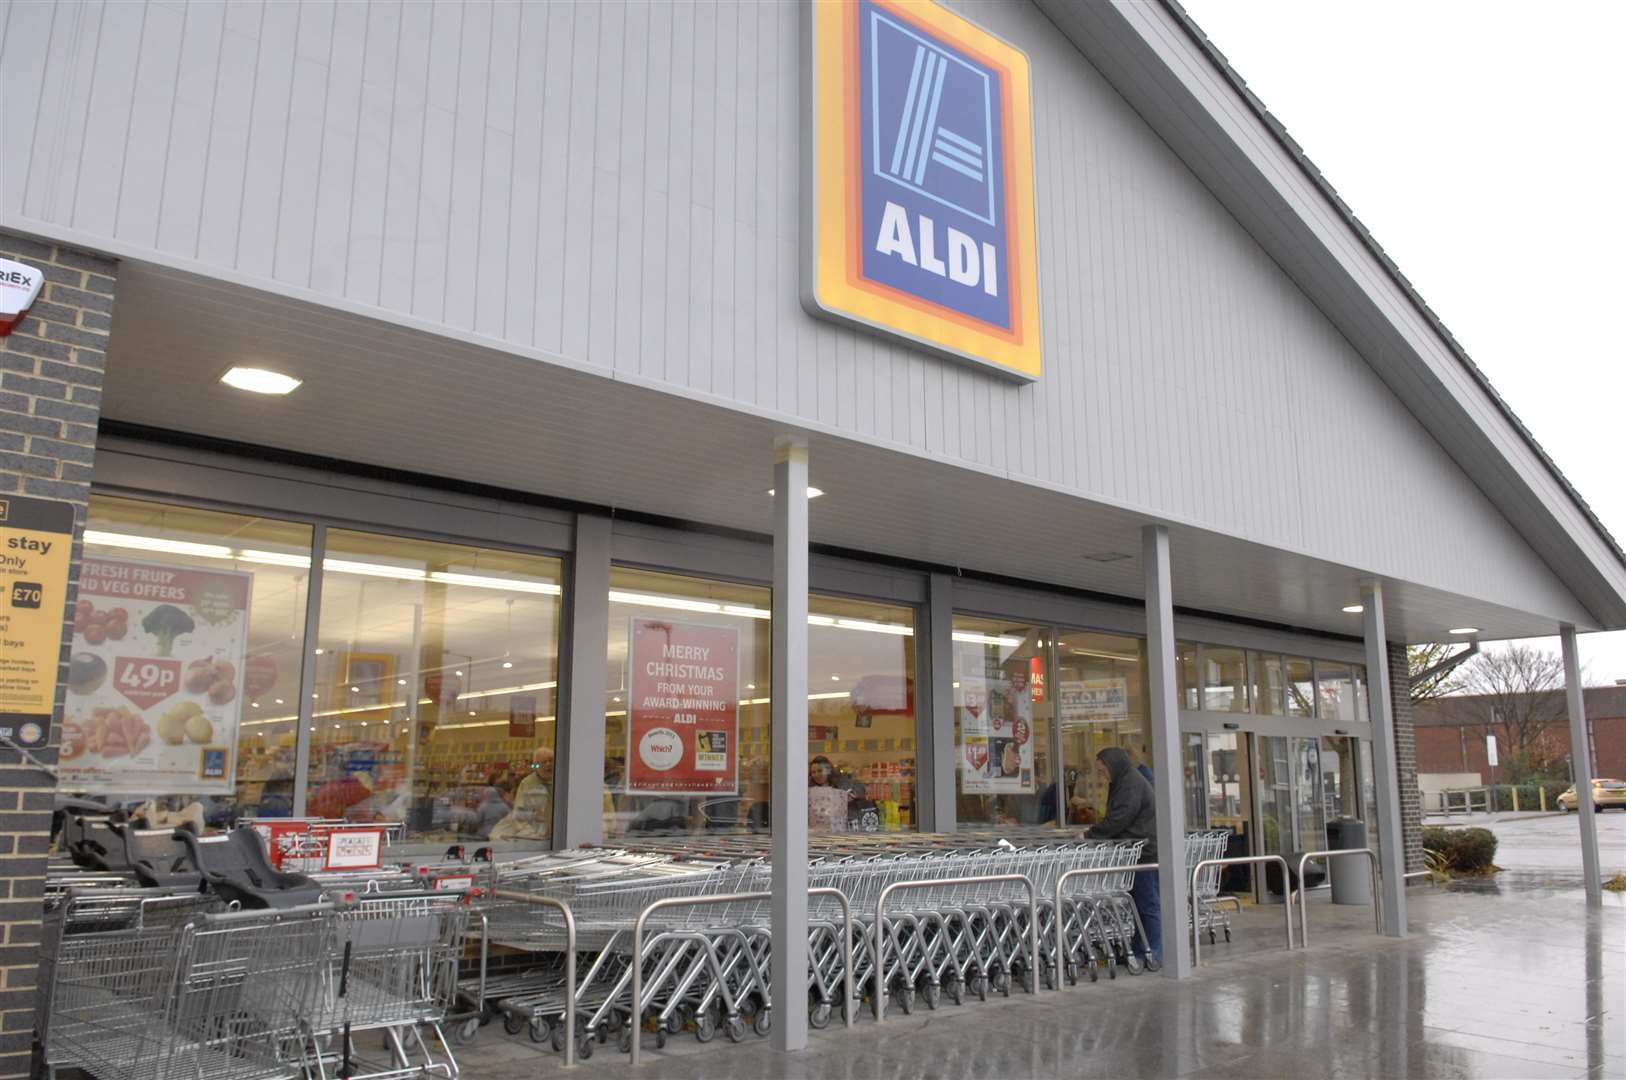 The Aldi store in Millennium Way, Sheerness